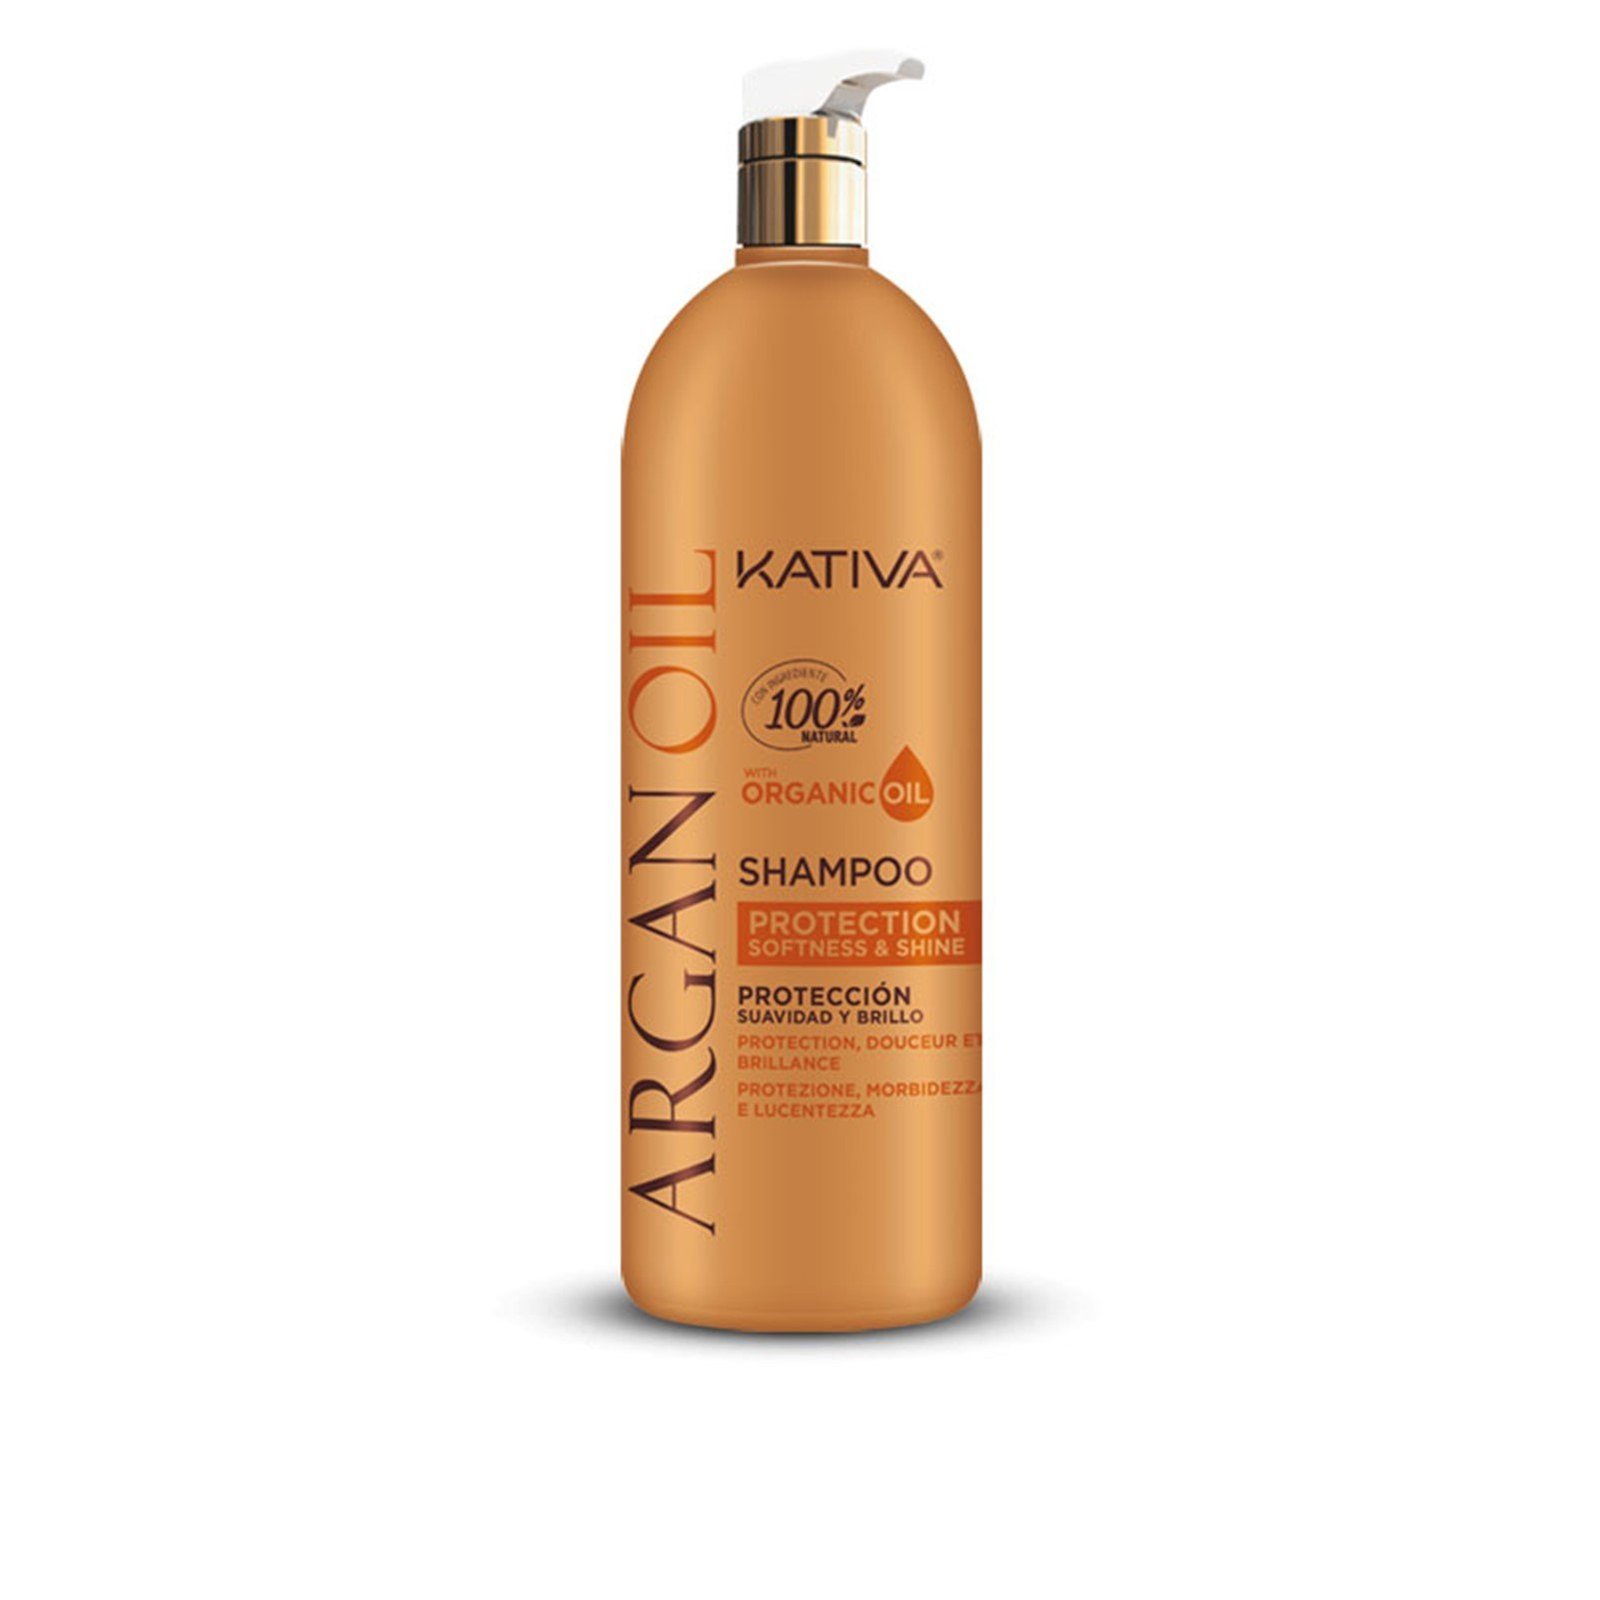 Kativa Argan Oil Protection Softness & Shine Shampoo 1L